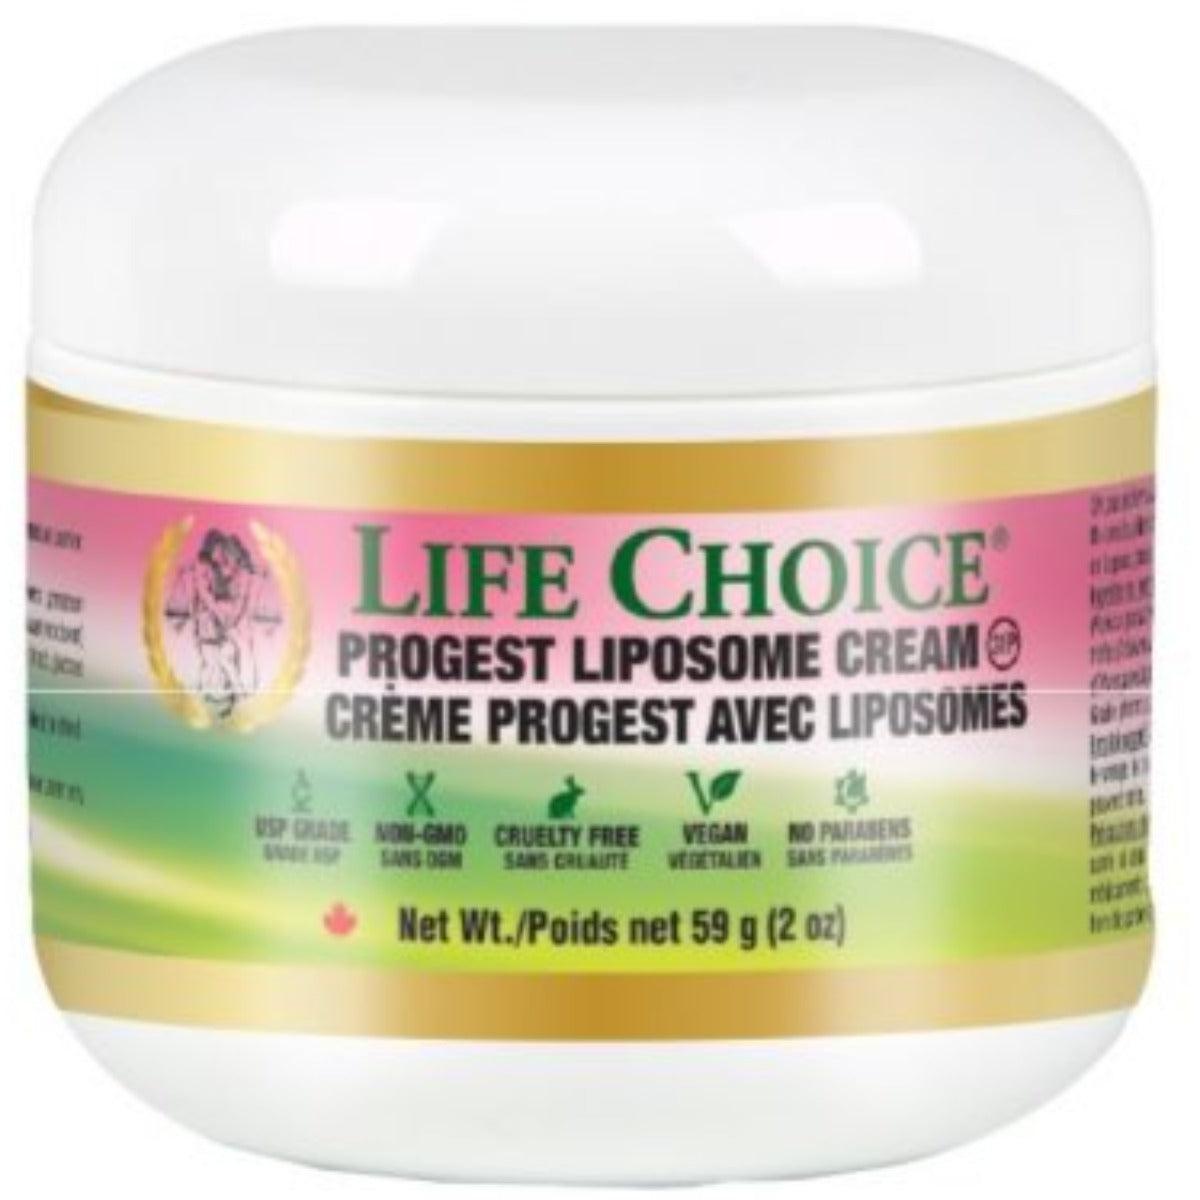 Life Choice Progest Liposome Cream 59g Personal Care at Village Vitamin Store